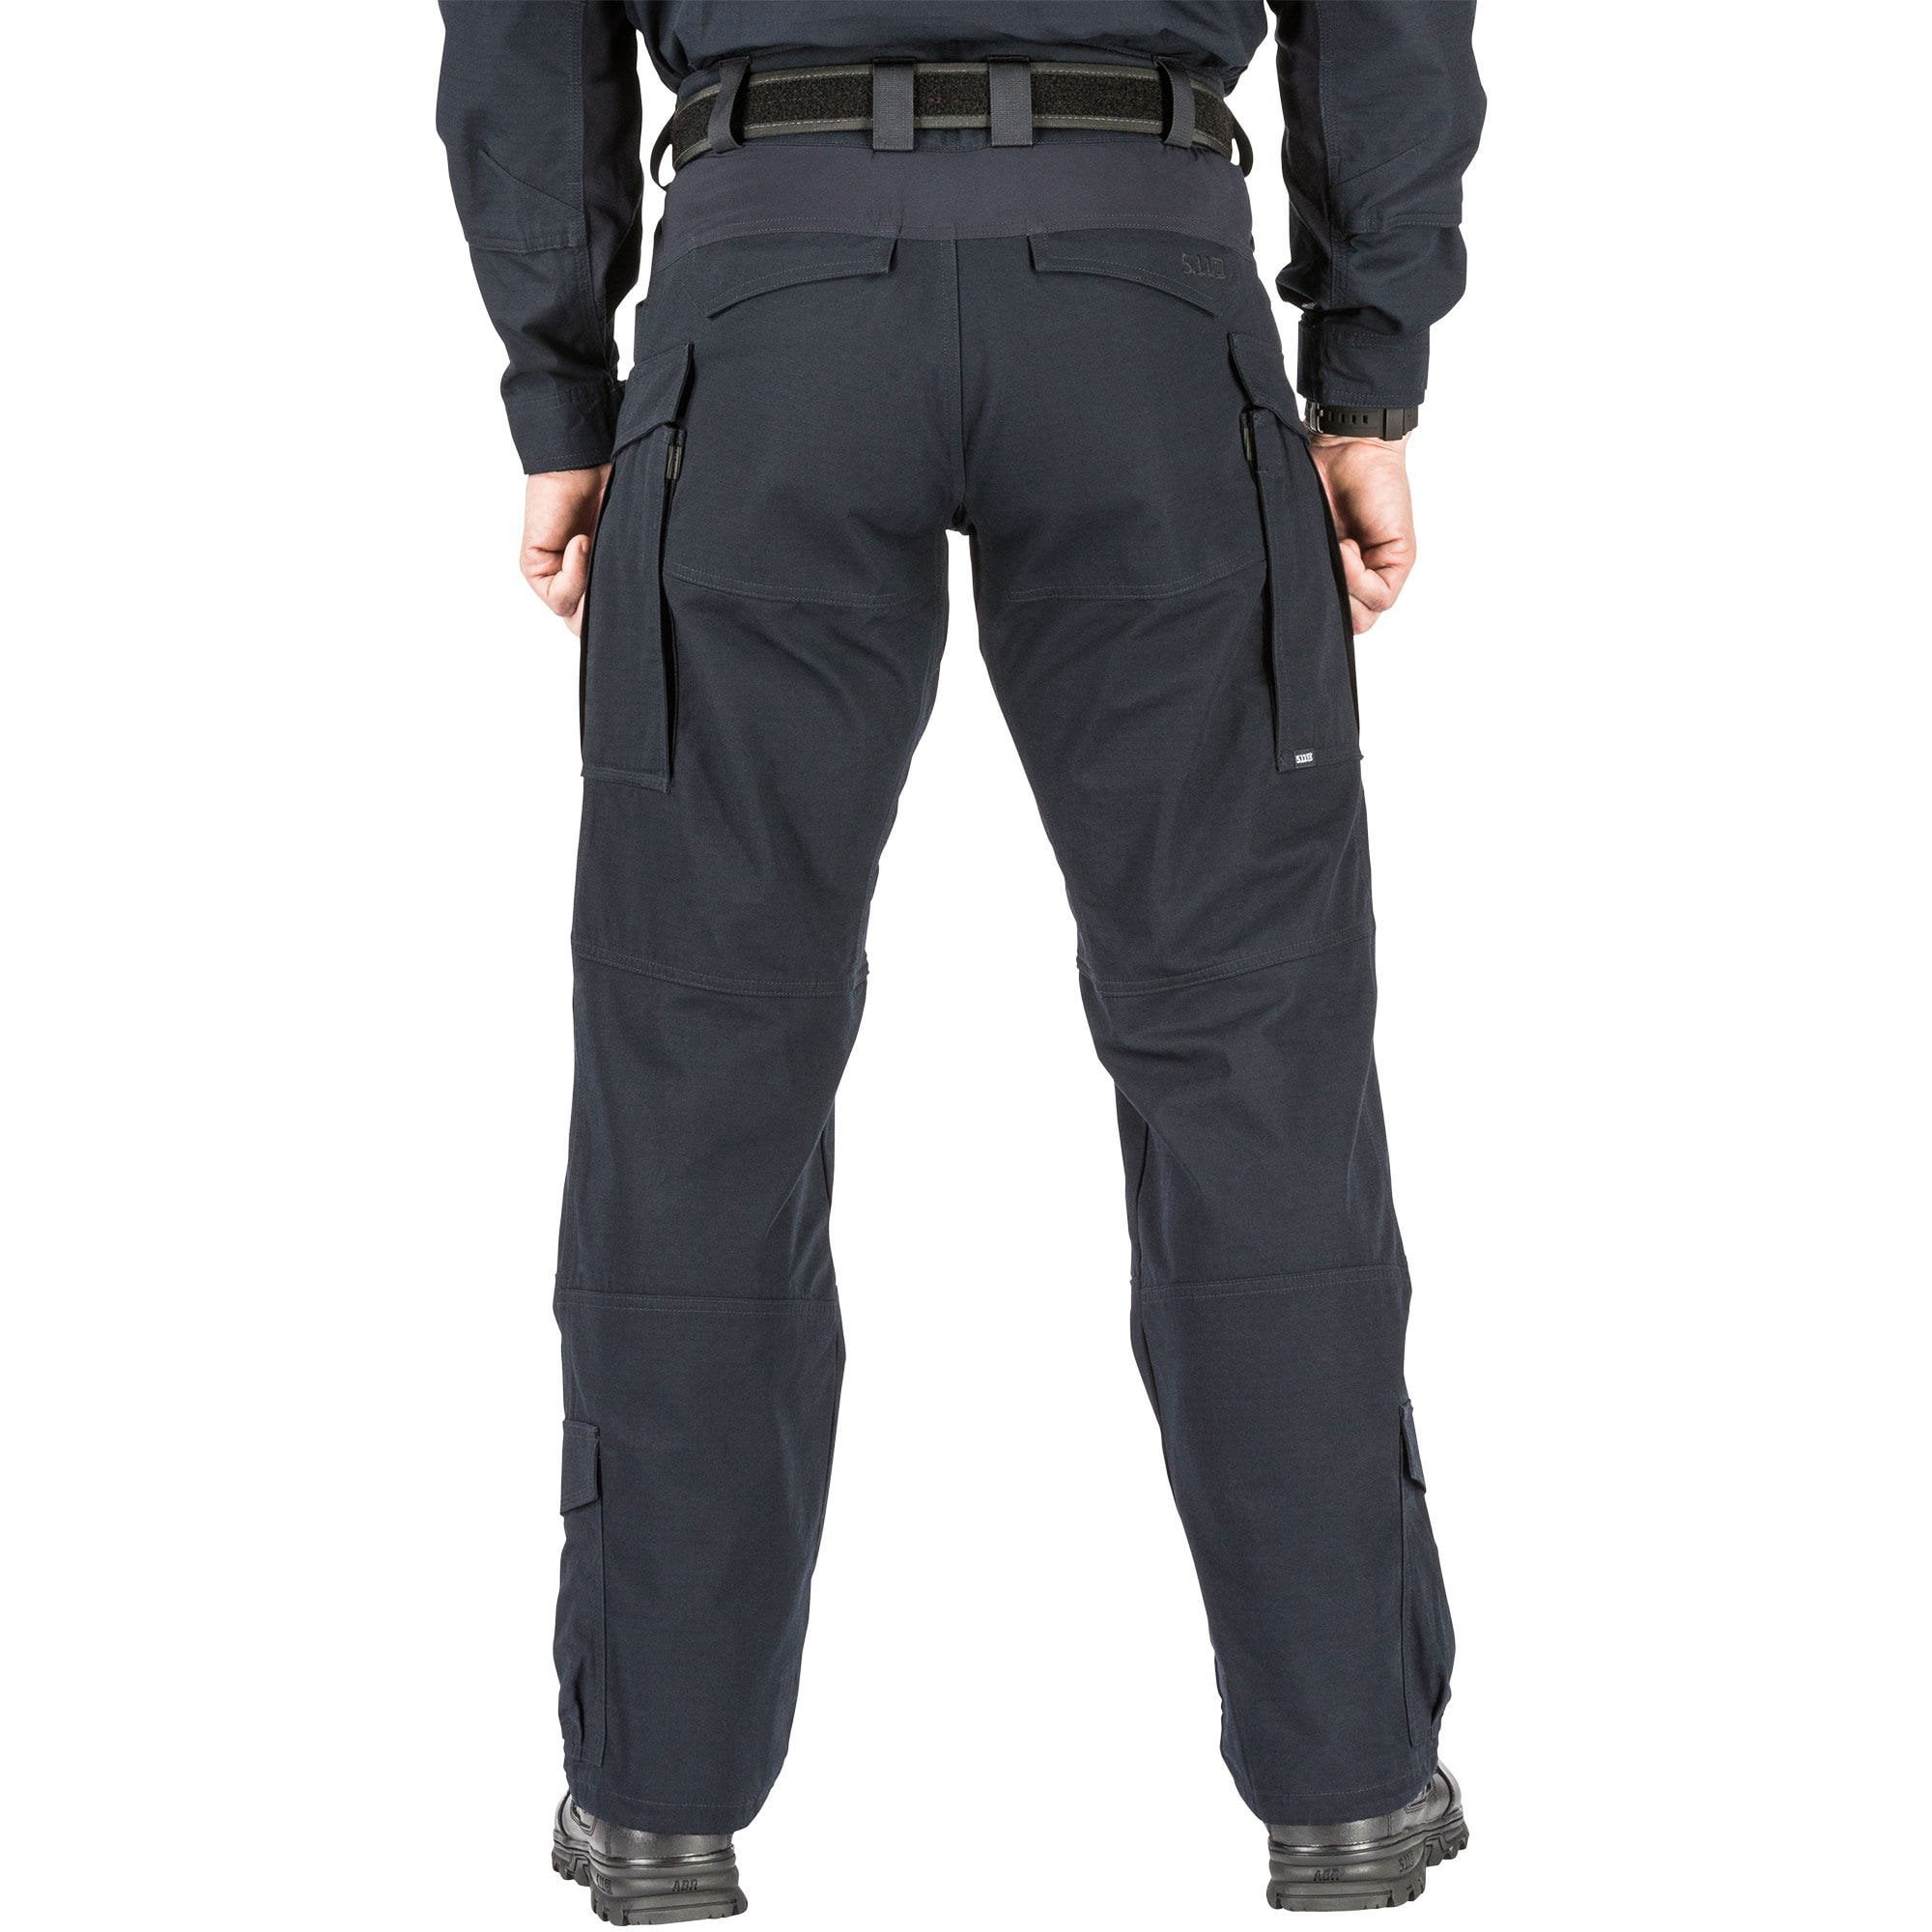 5.11 Work Gear XPRT Pants, Teflon Treated, Nylon Ripstop Fabric, Dark Navy,  42W x 30L, Style 74068